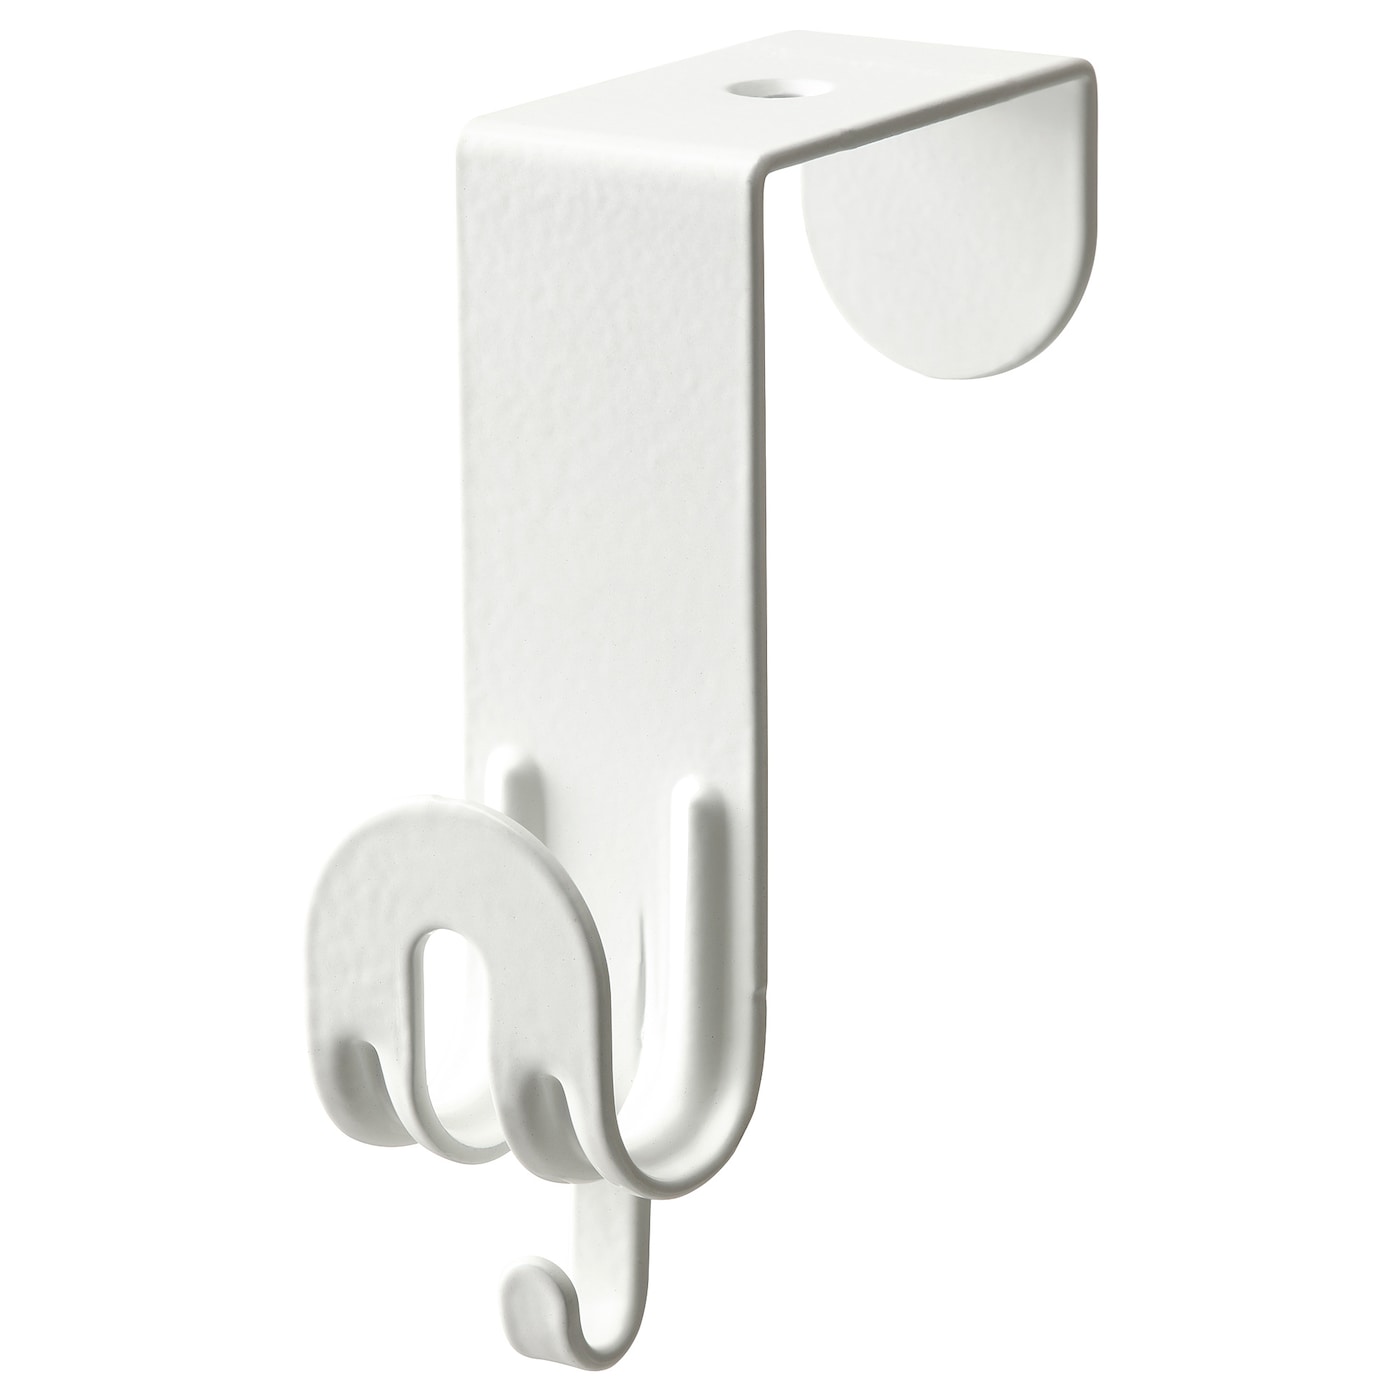 Вешалка на дверь - SEKINER IKEA/ СЕКИНЕР ИКЕА, 9х2,5 см, белый